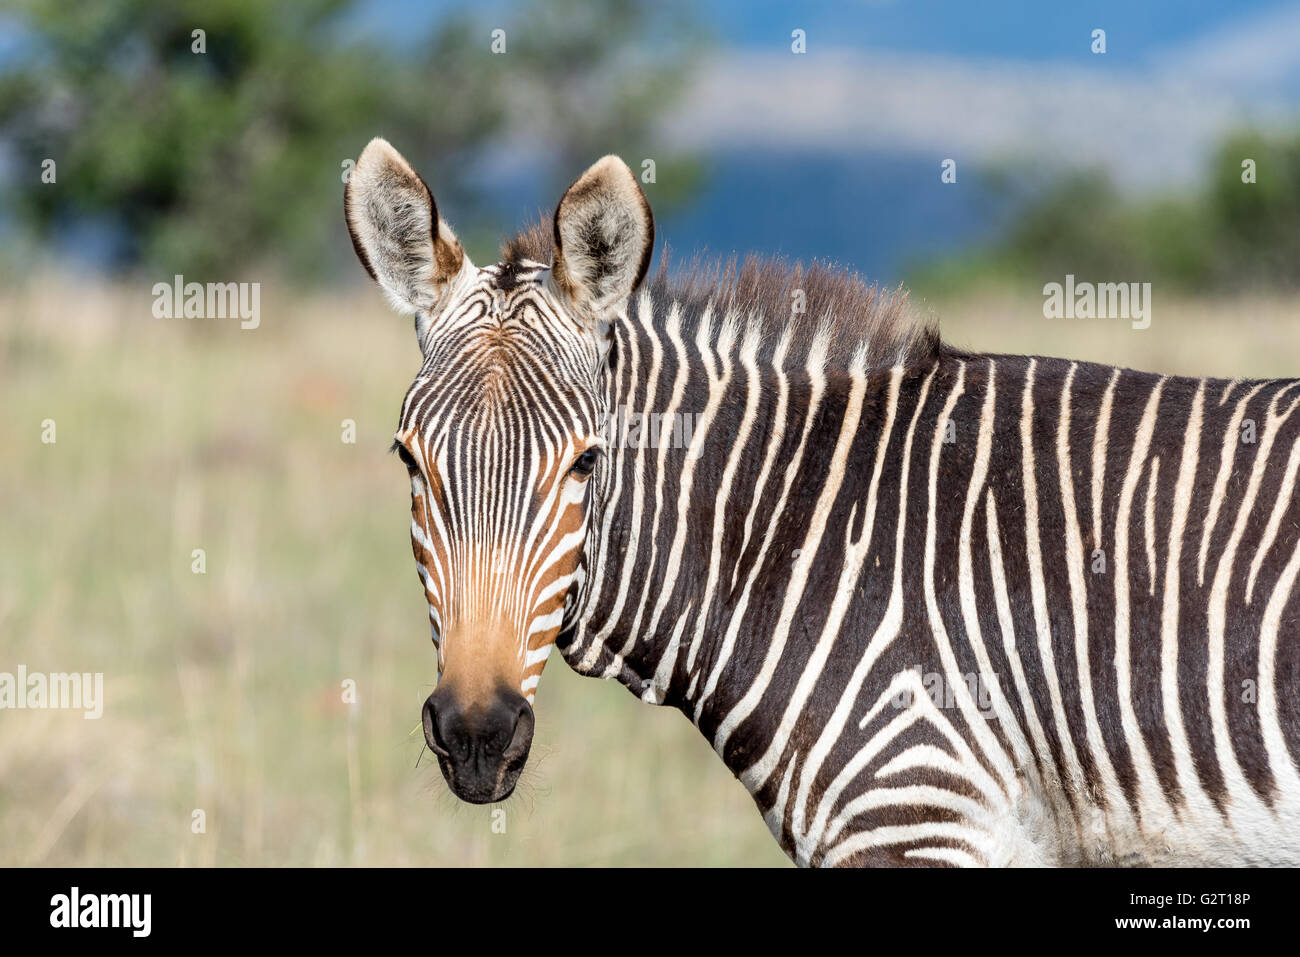 A mountain zebra, Equus zebra zebra, looking towards the camera near Cradock in South Africa Stock Photo